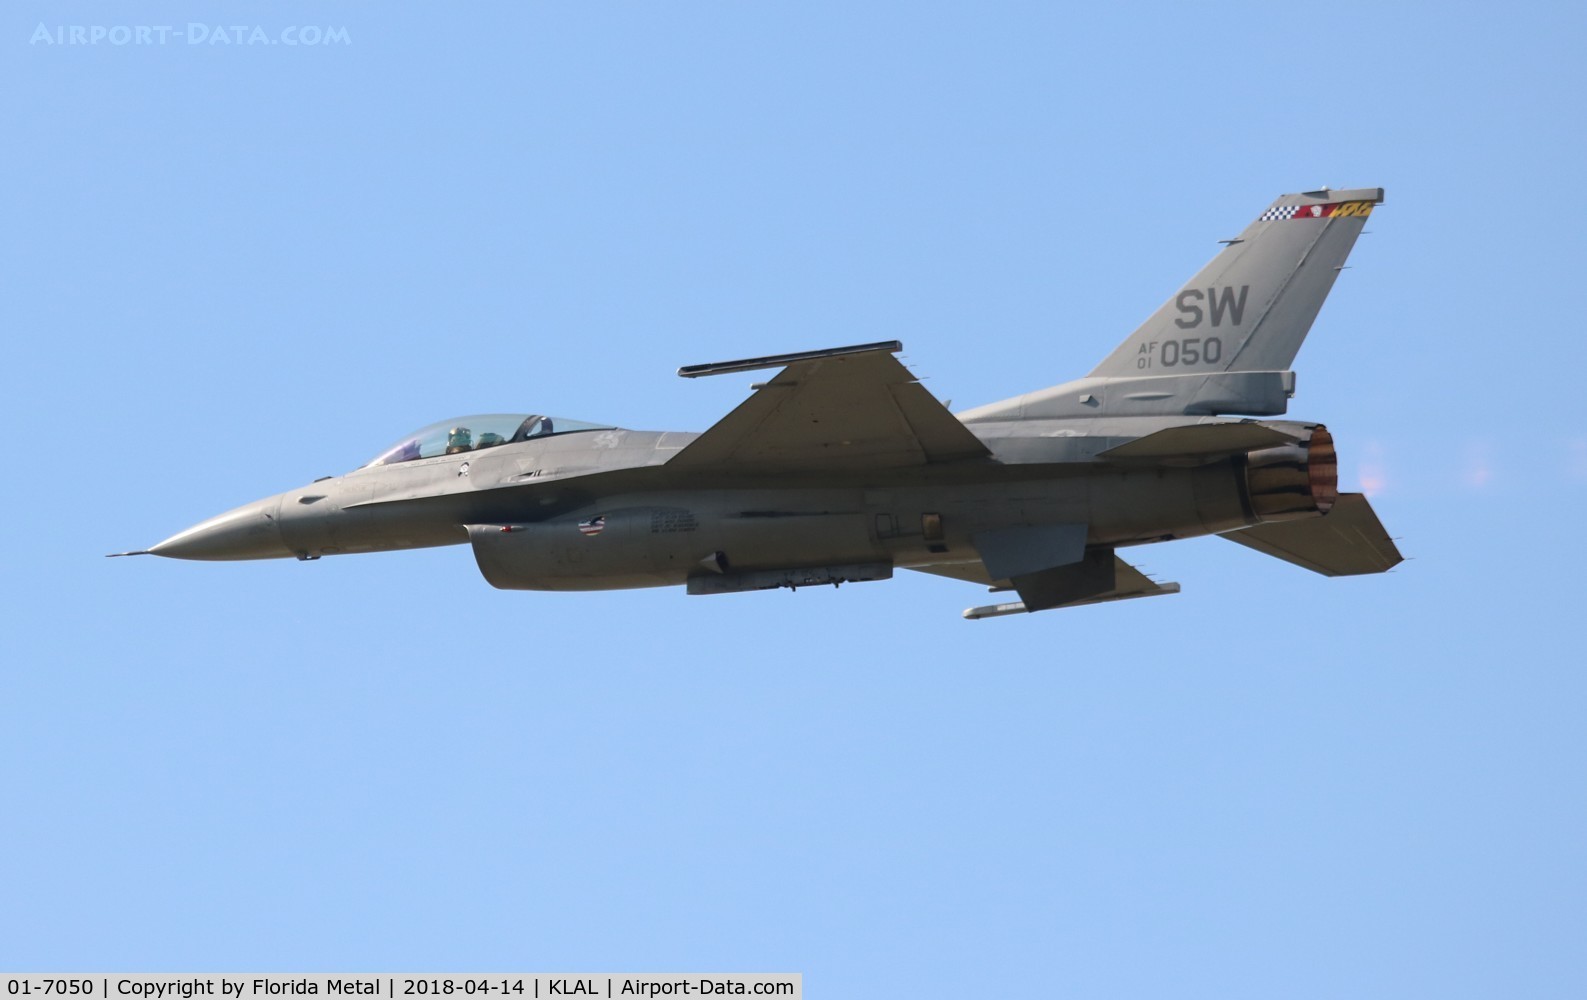 01-7050, 2001 Lockheed Martin F-16CJ Fighting Falcon C/N CC-228, F-16CJ